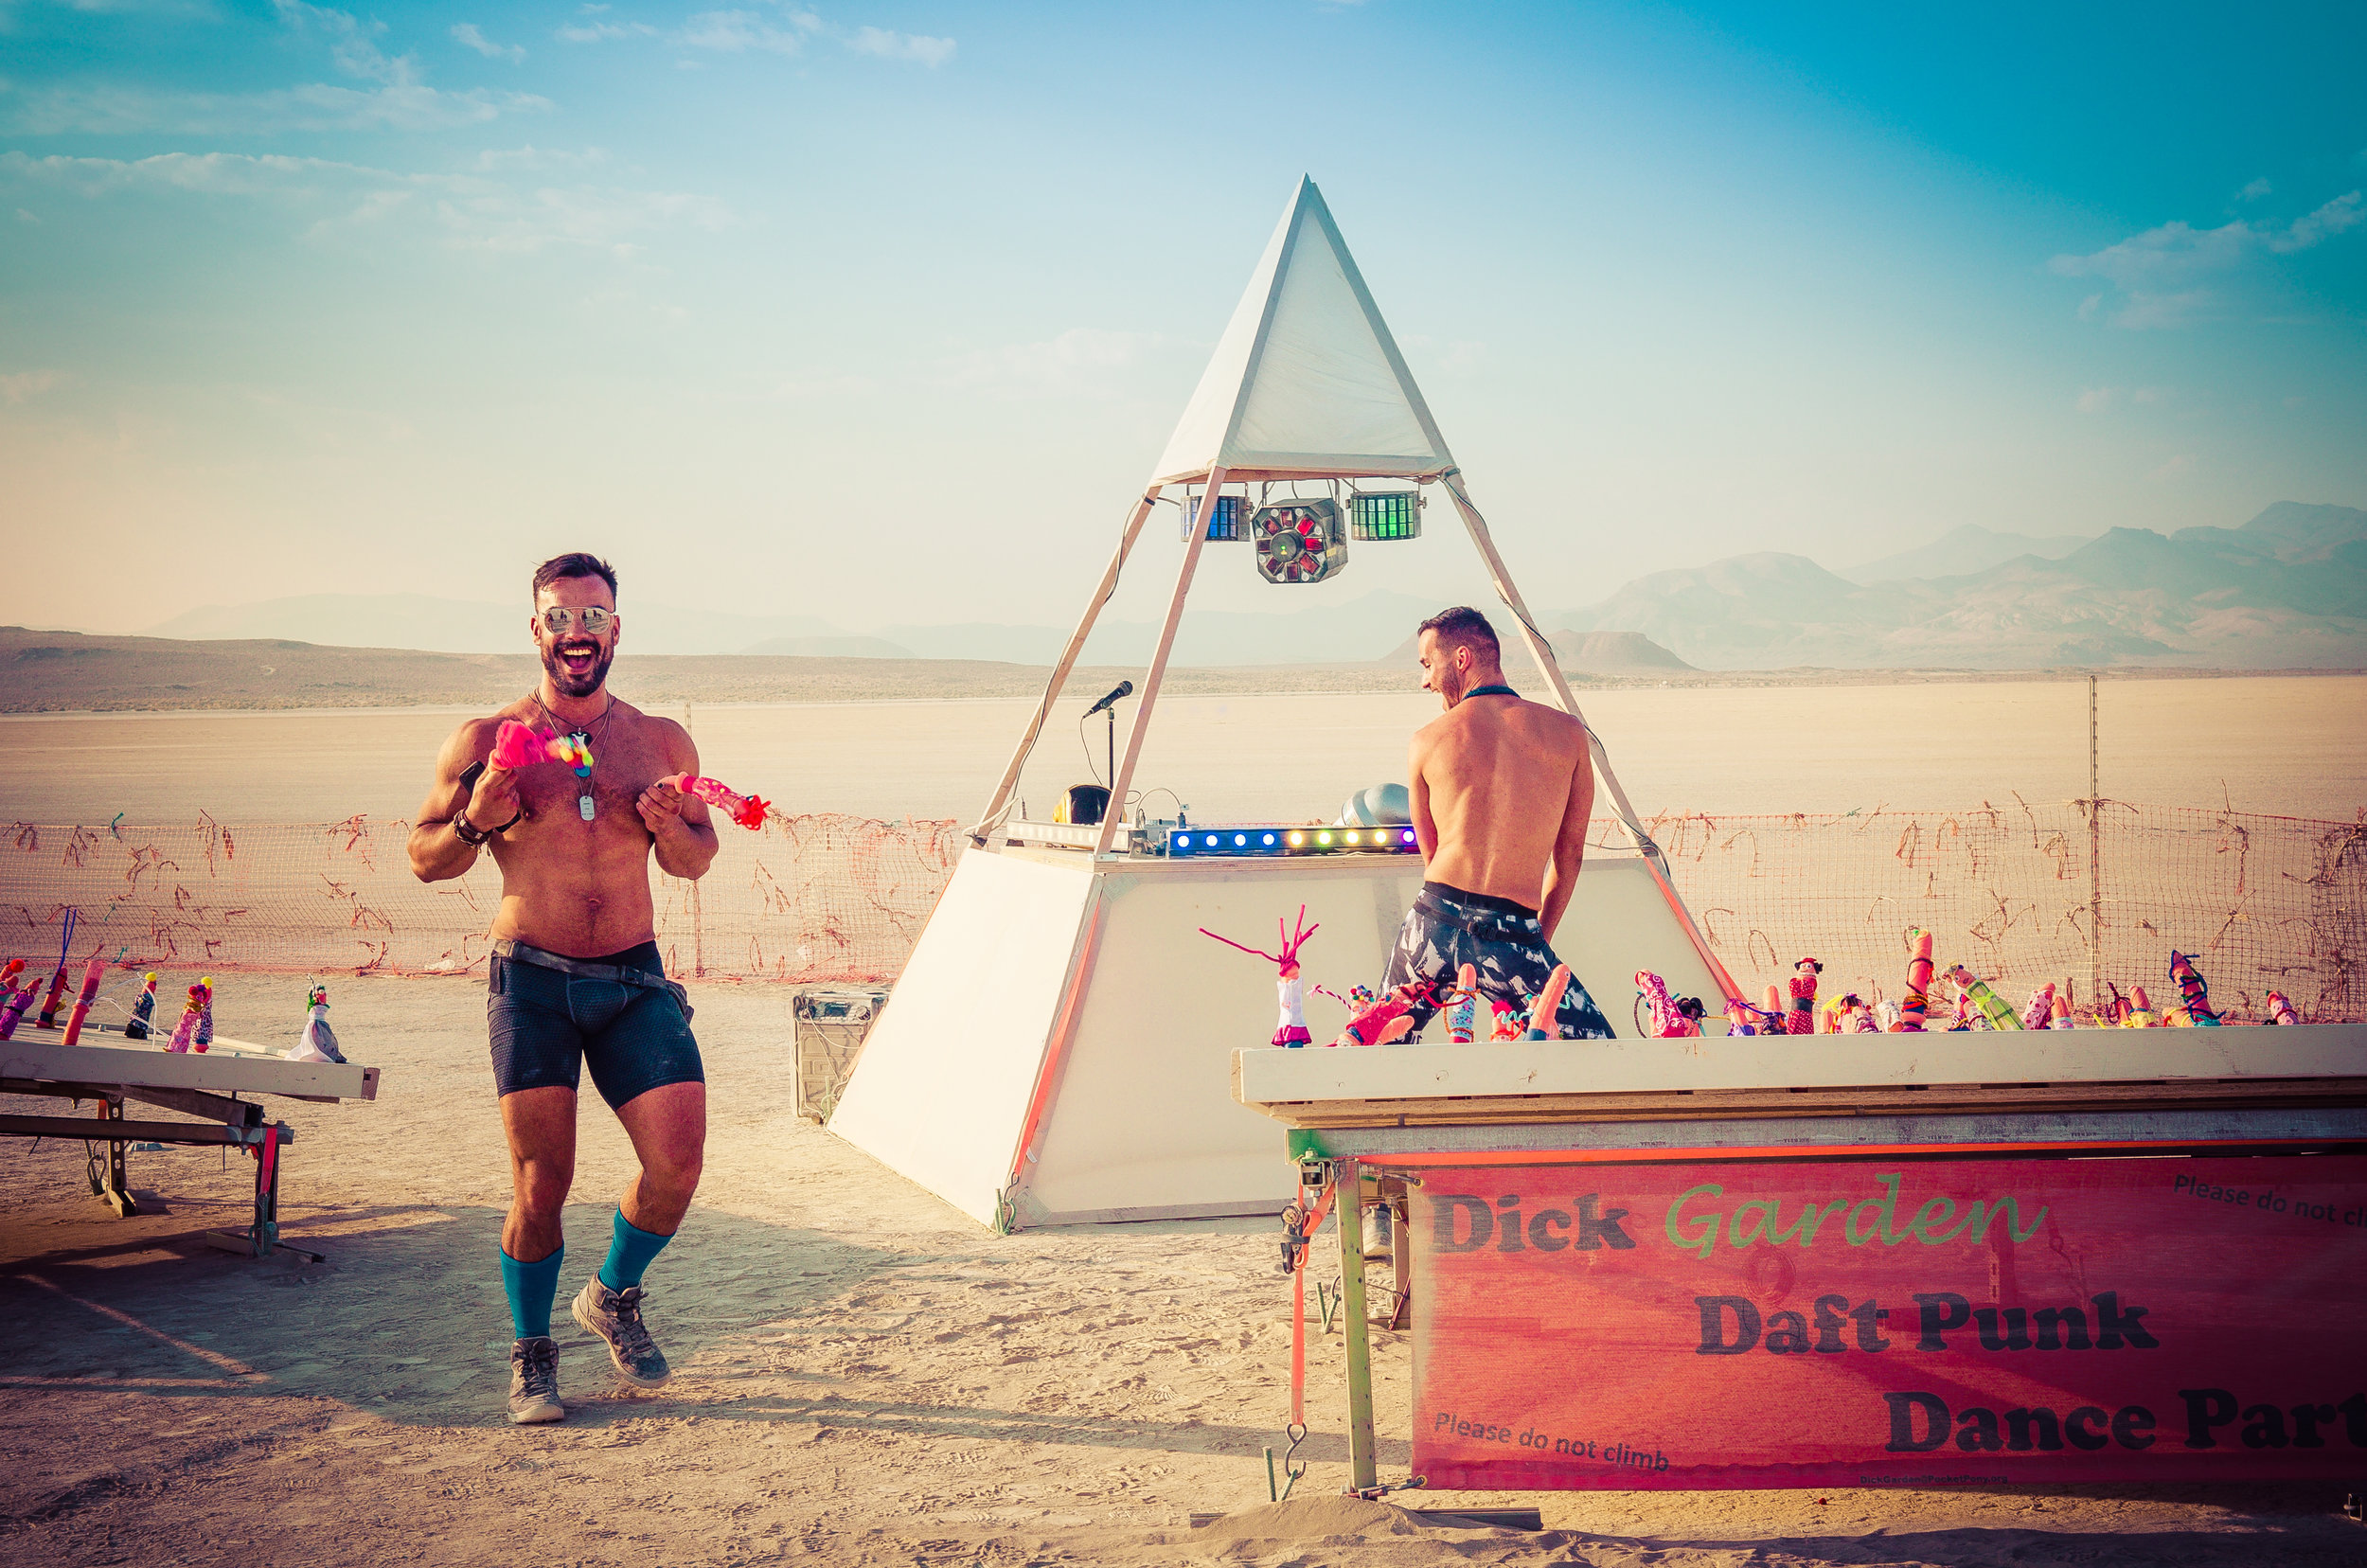 Burning Man 2018 - Daft Punk Dick Garden